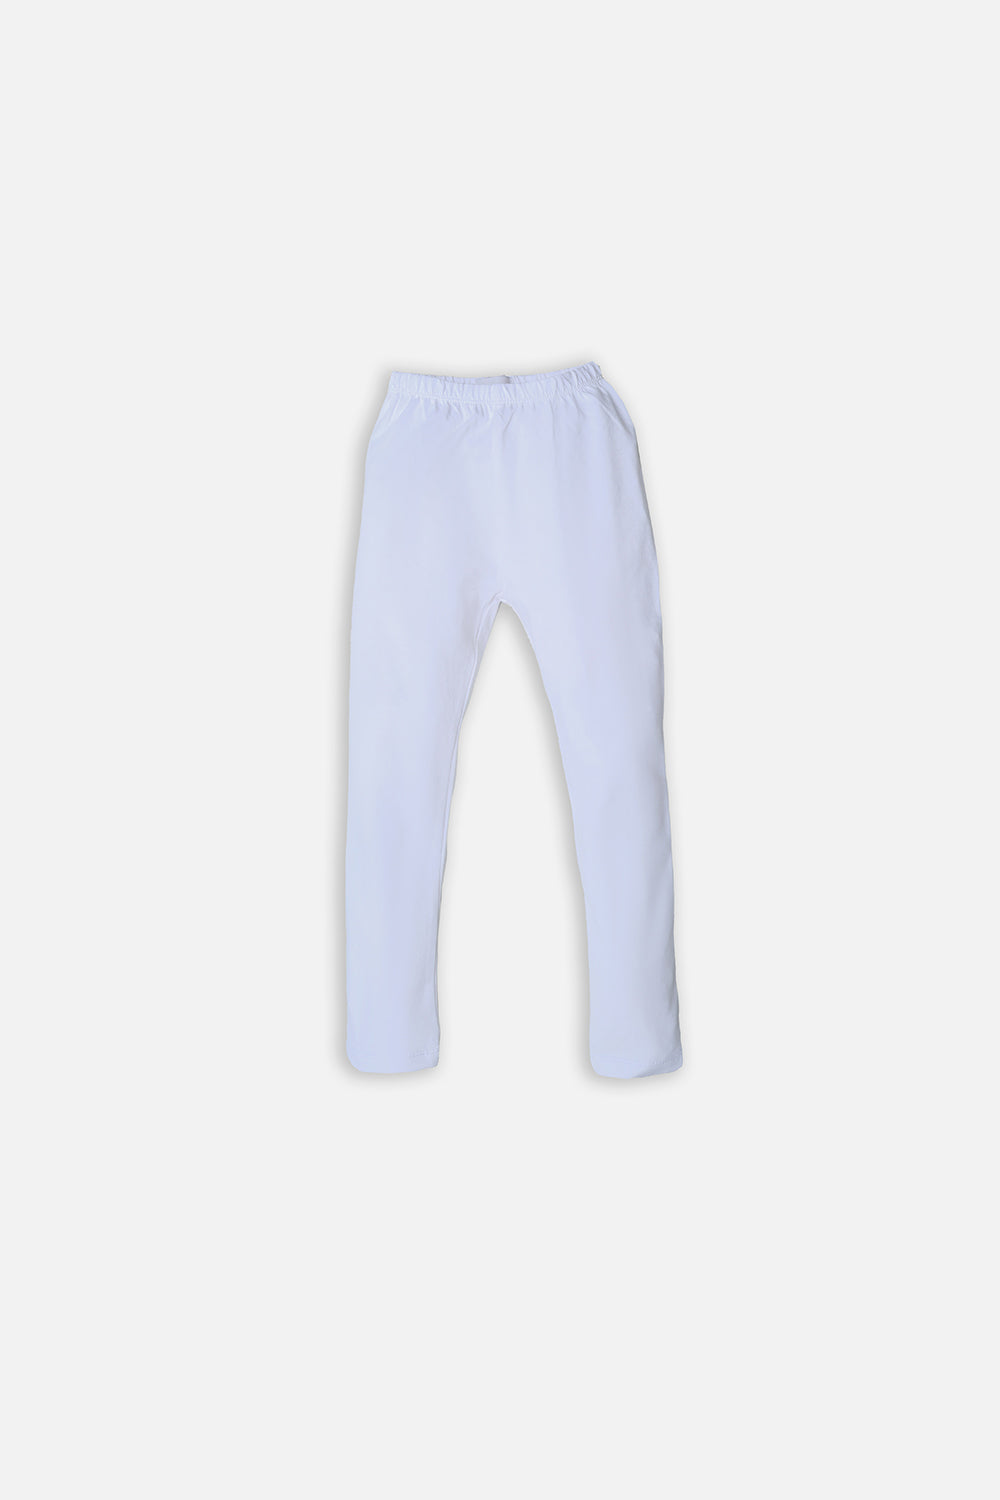 White Plain tights 100% cotton jersey fabric